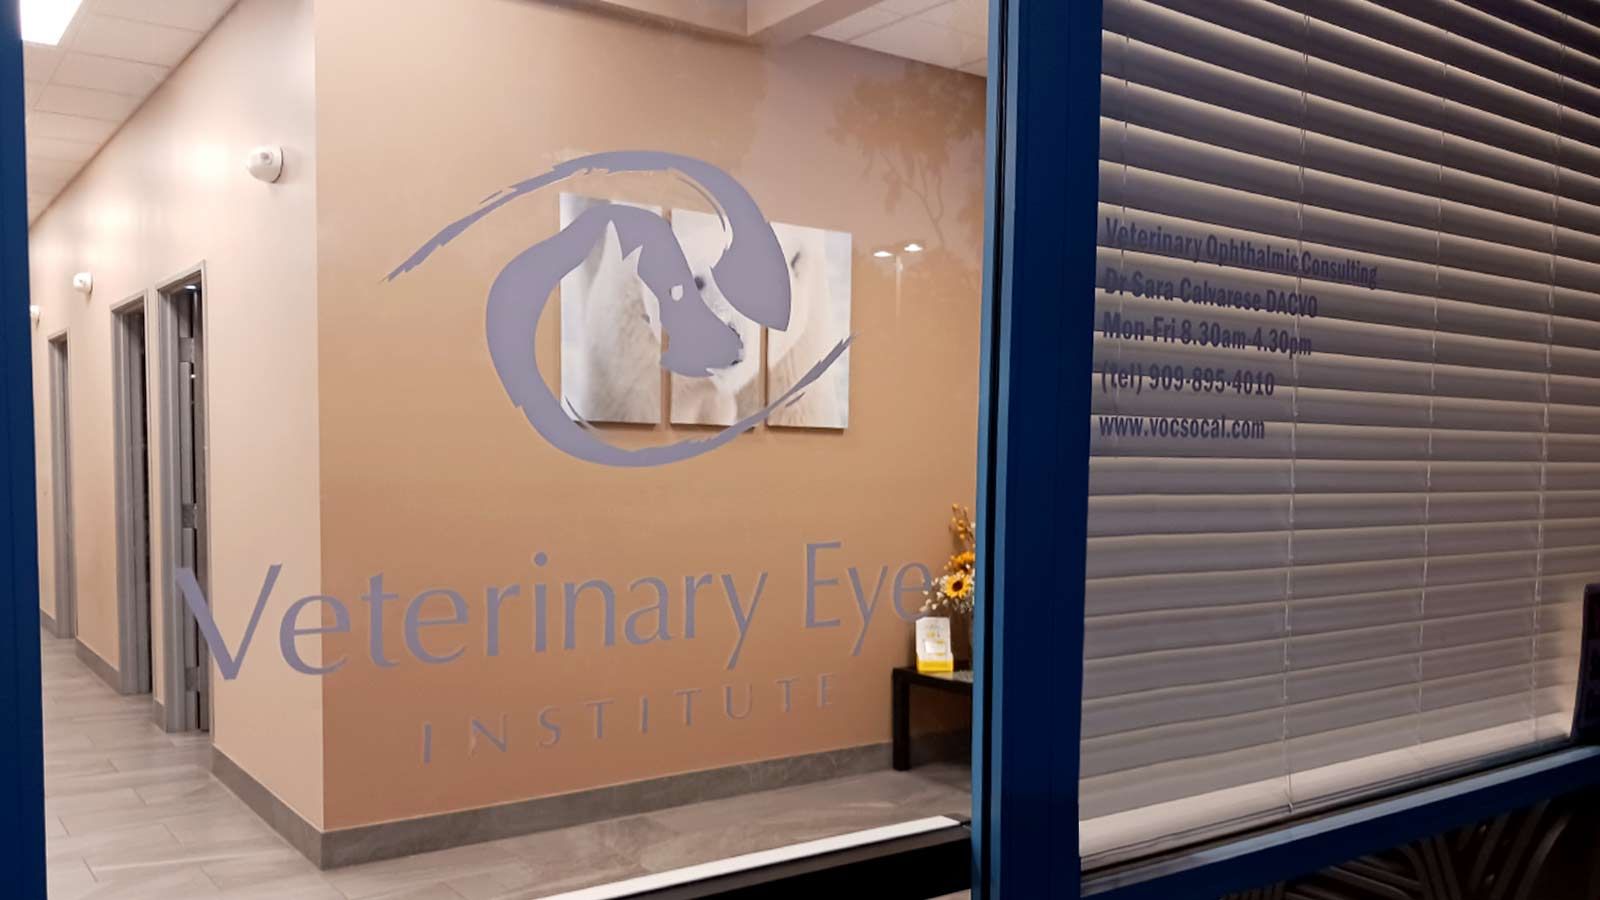 Veterinary Eye Institute window decal for branding